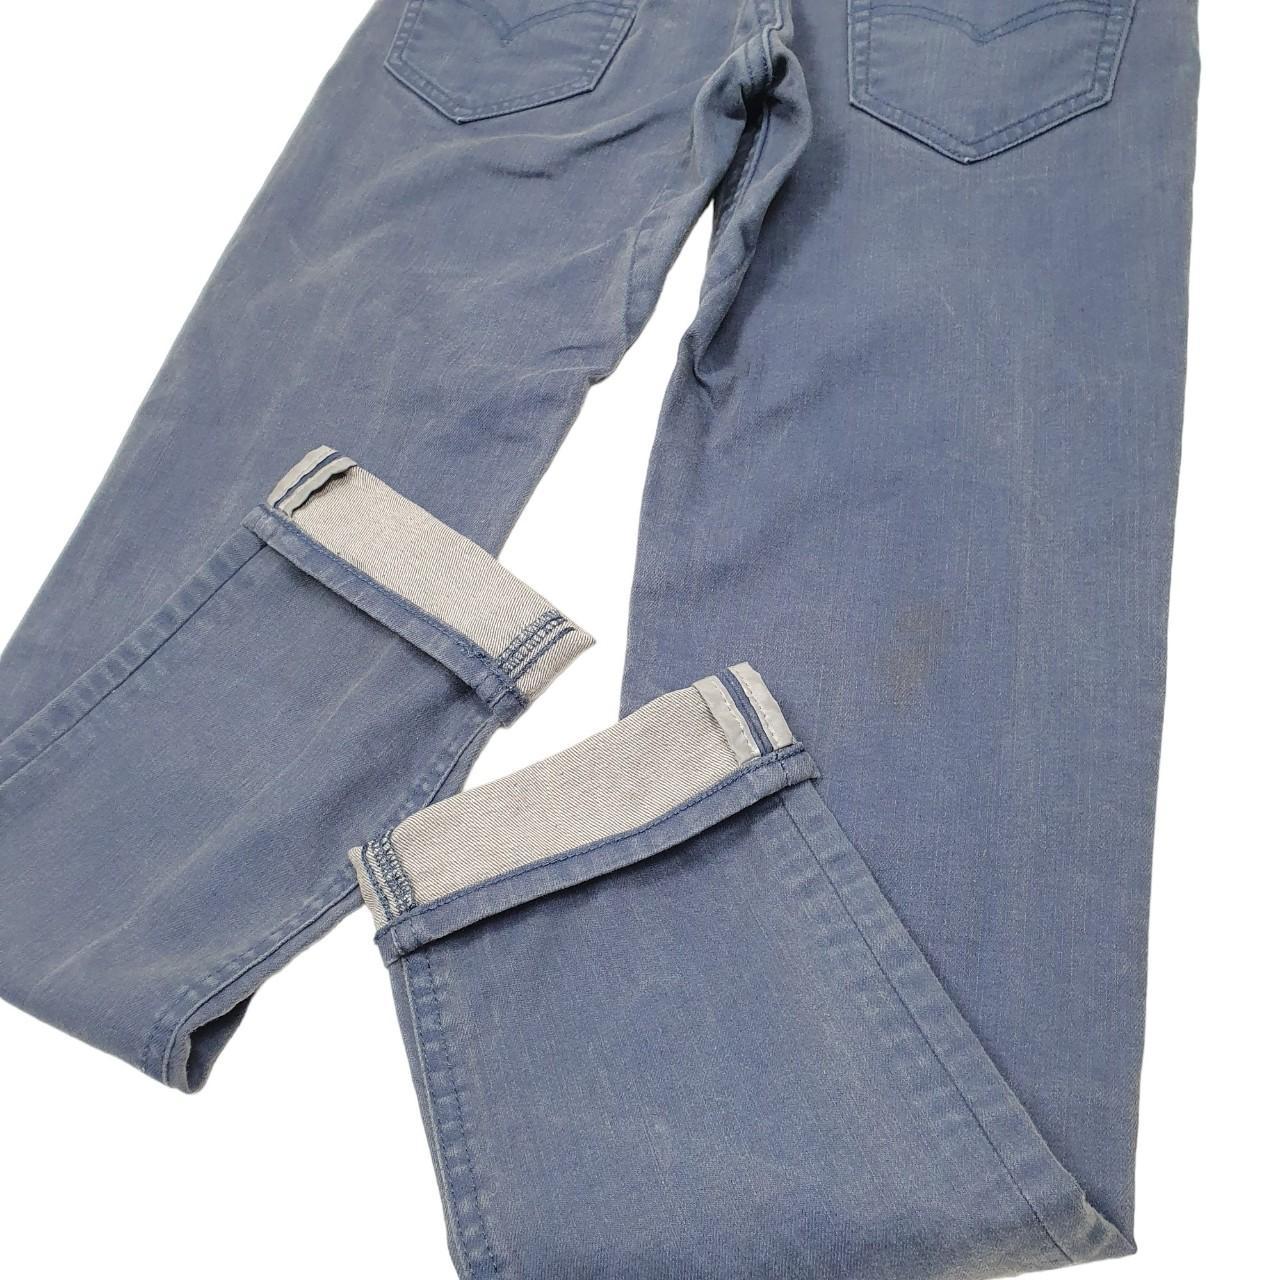 Levi's Commuter 541 Athletic Fit jeans, Indigo Denim, 19715-0000, 197150000  – Norwood